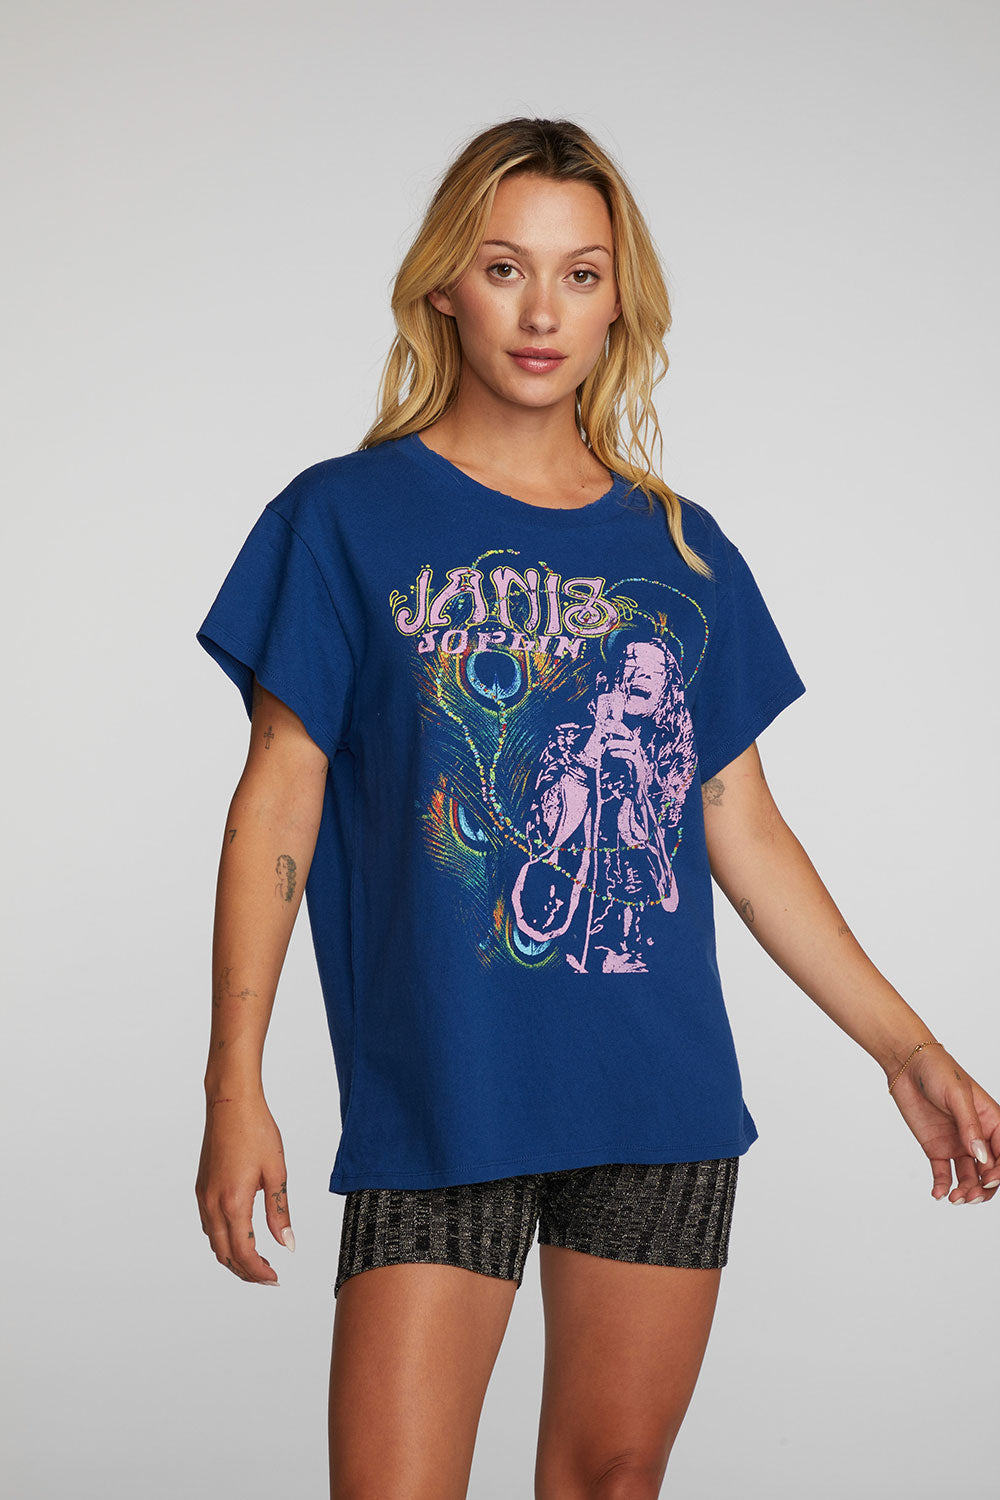 Janis Joplin - Retro Janis Womens chaserbrand